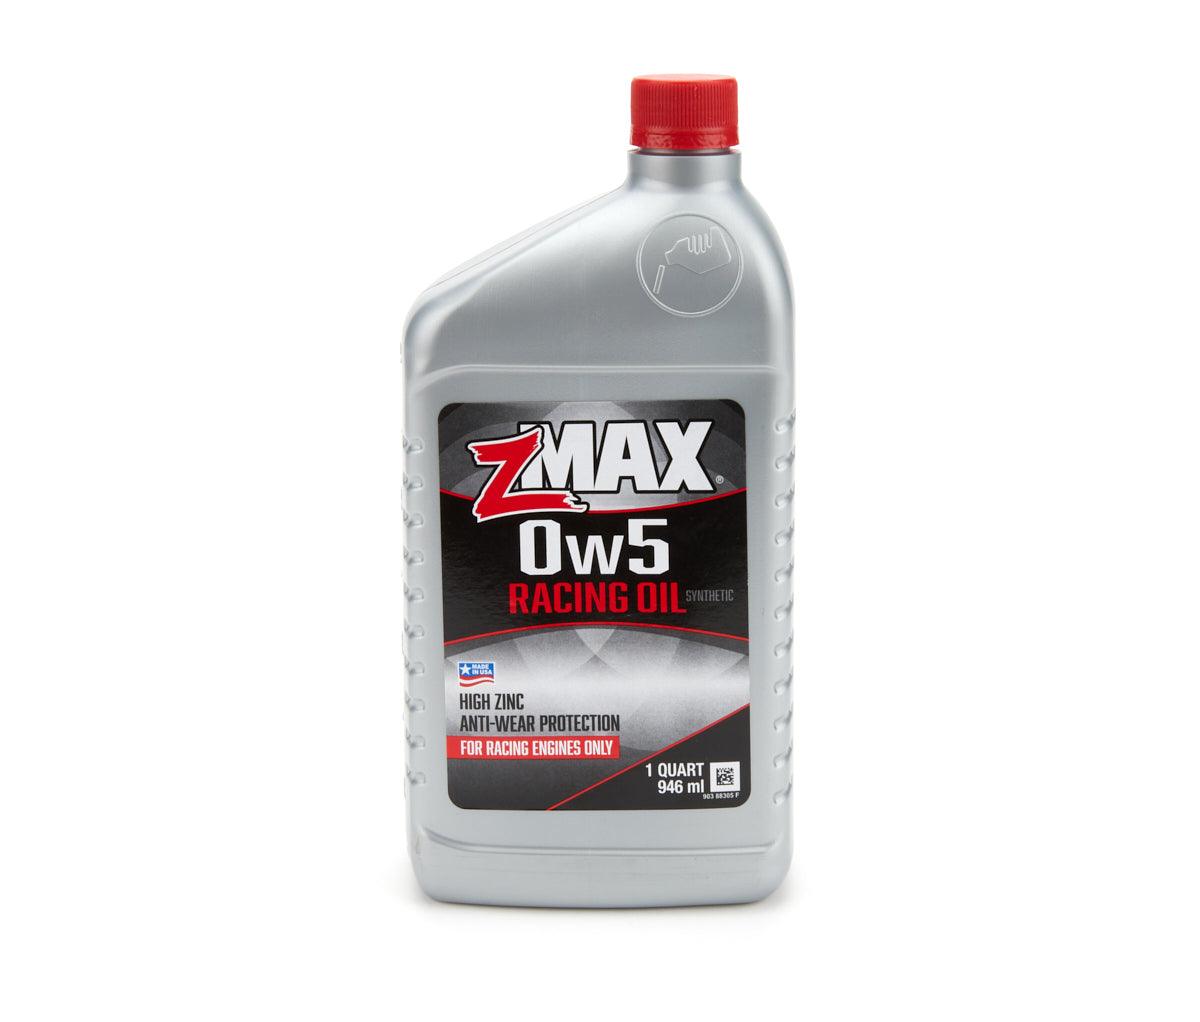 Racing Oil 0w5 32oz. Bottle - Burlile Performance Products